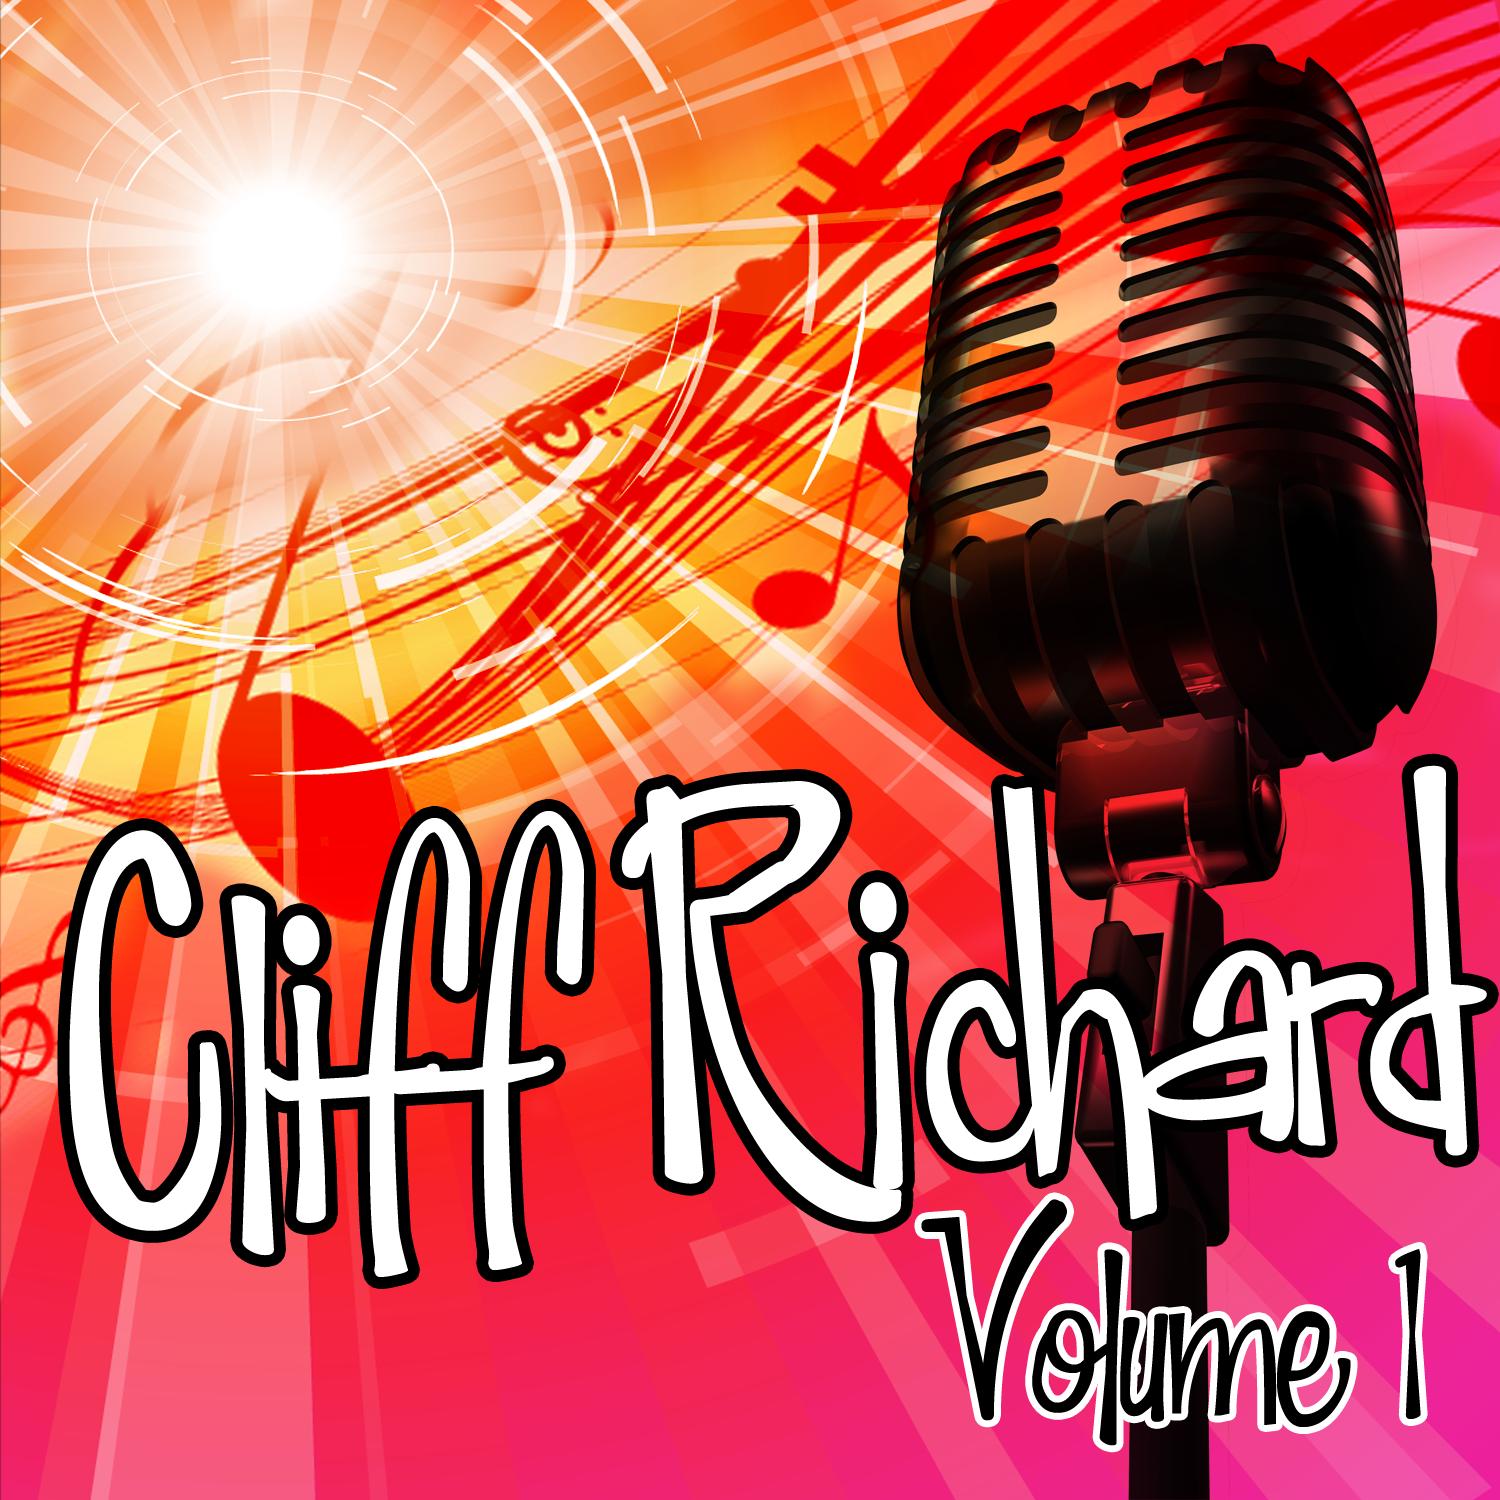 Cliff Richard Volume 1